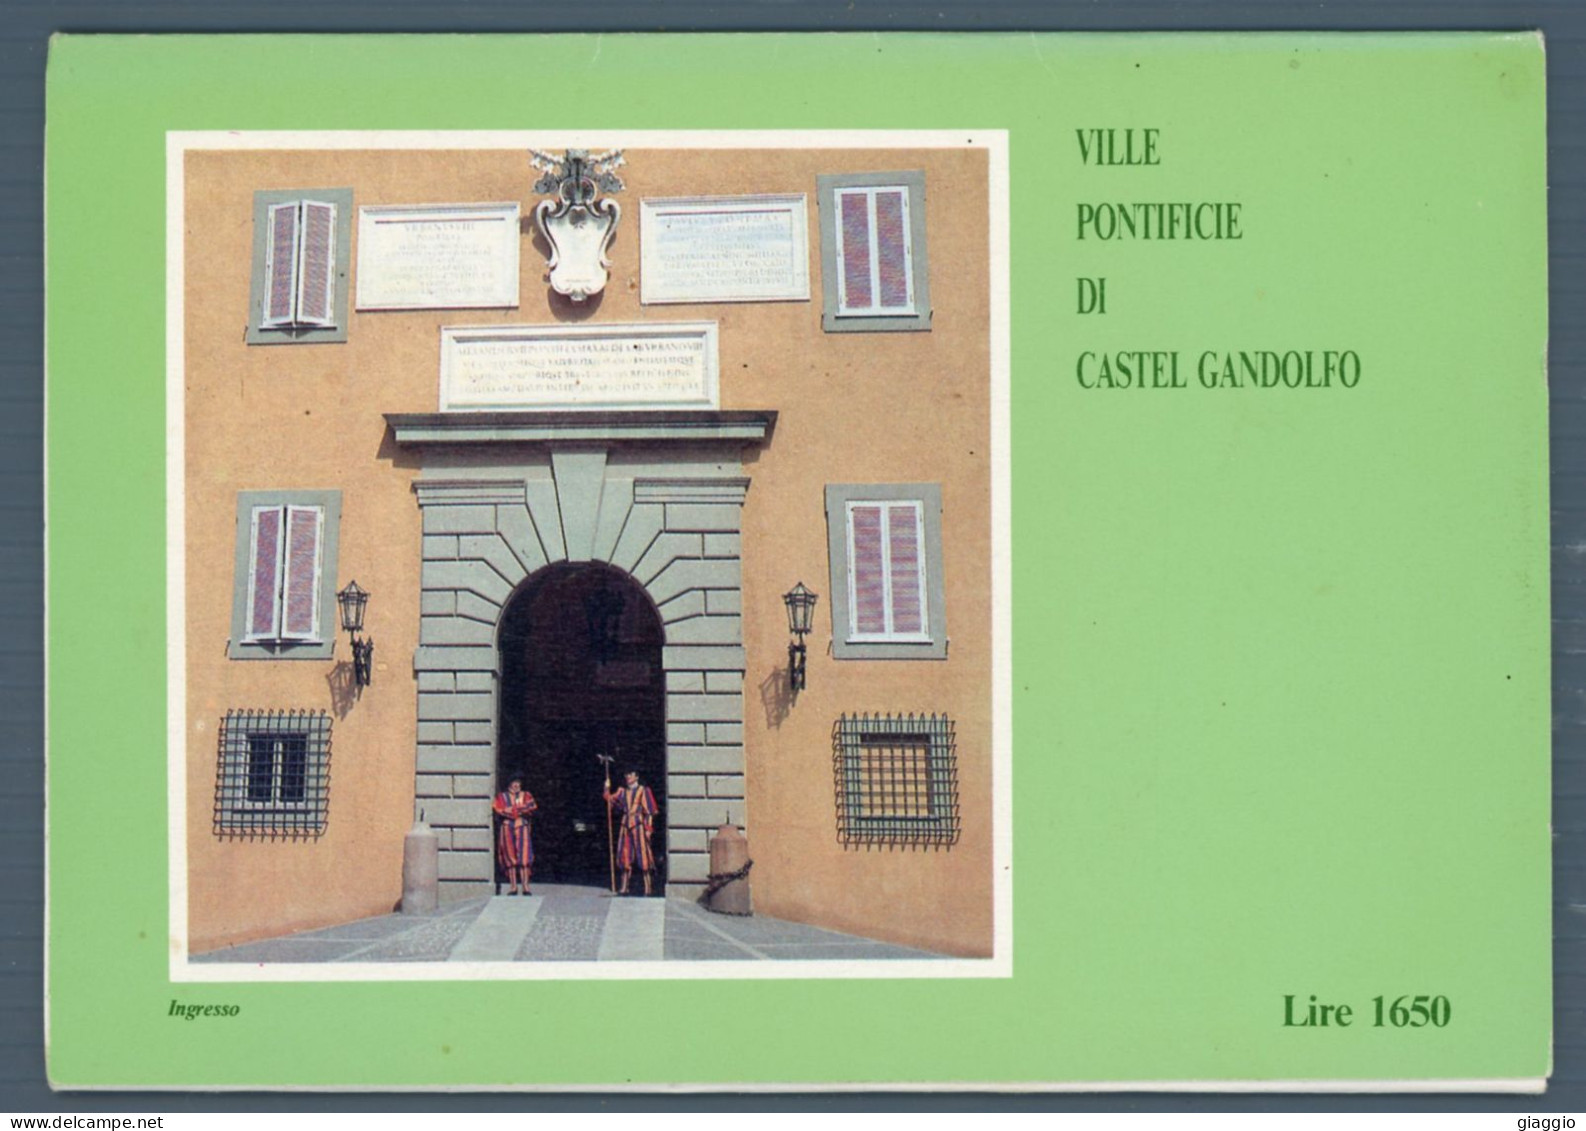 °°° Francobolli - N. 1871 - Vaticano Cartoline Postali Ville Pontificie Di Castelgandolfo °°° - Ganzsachen